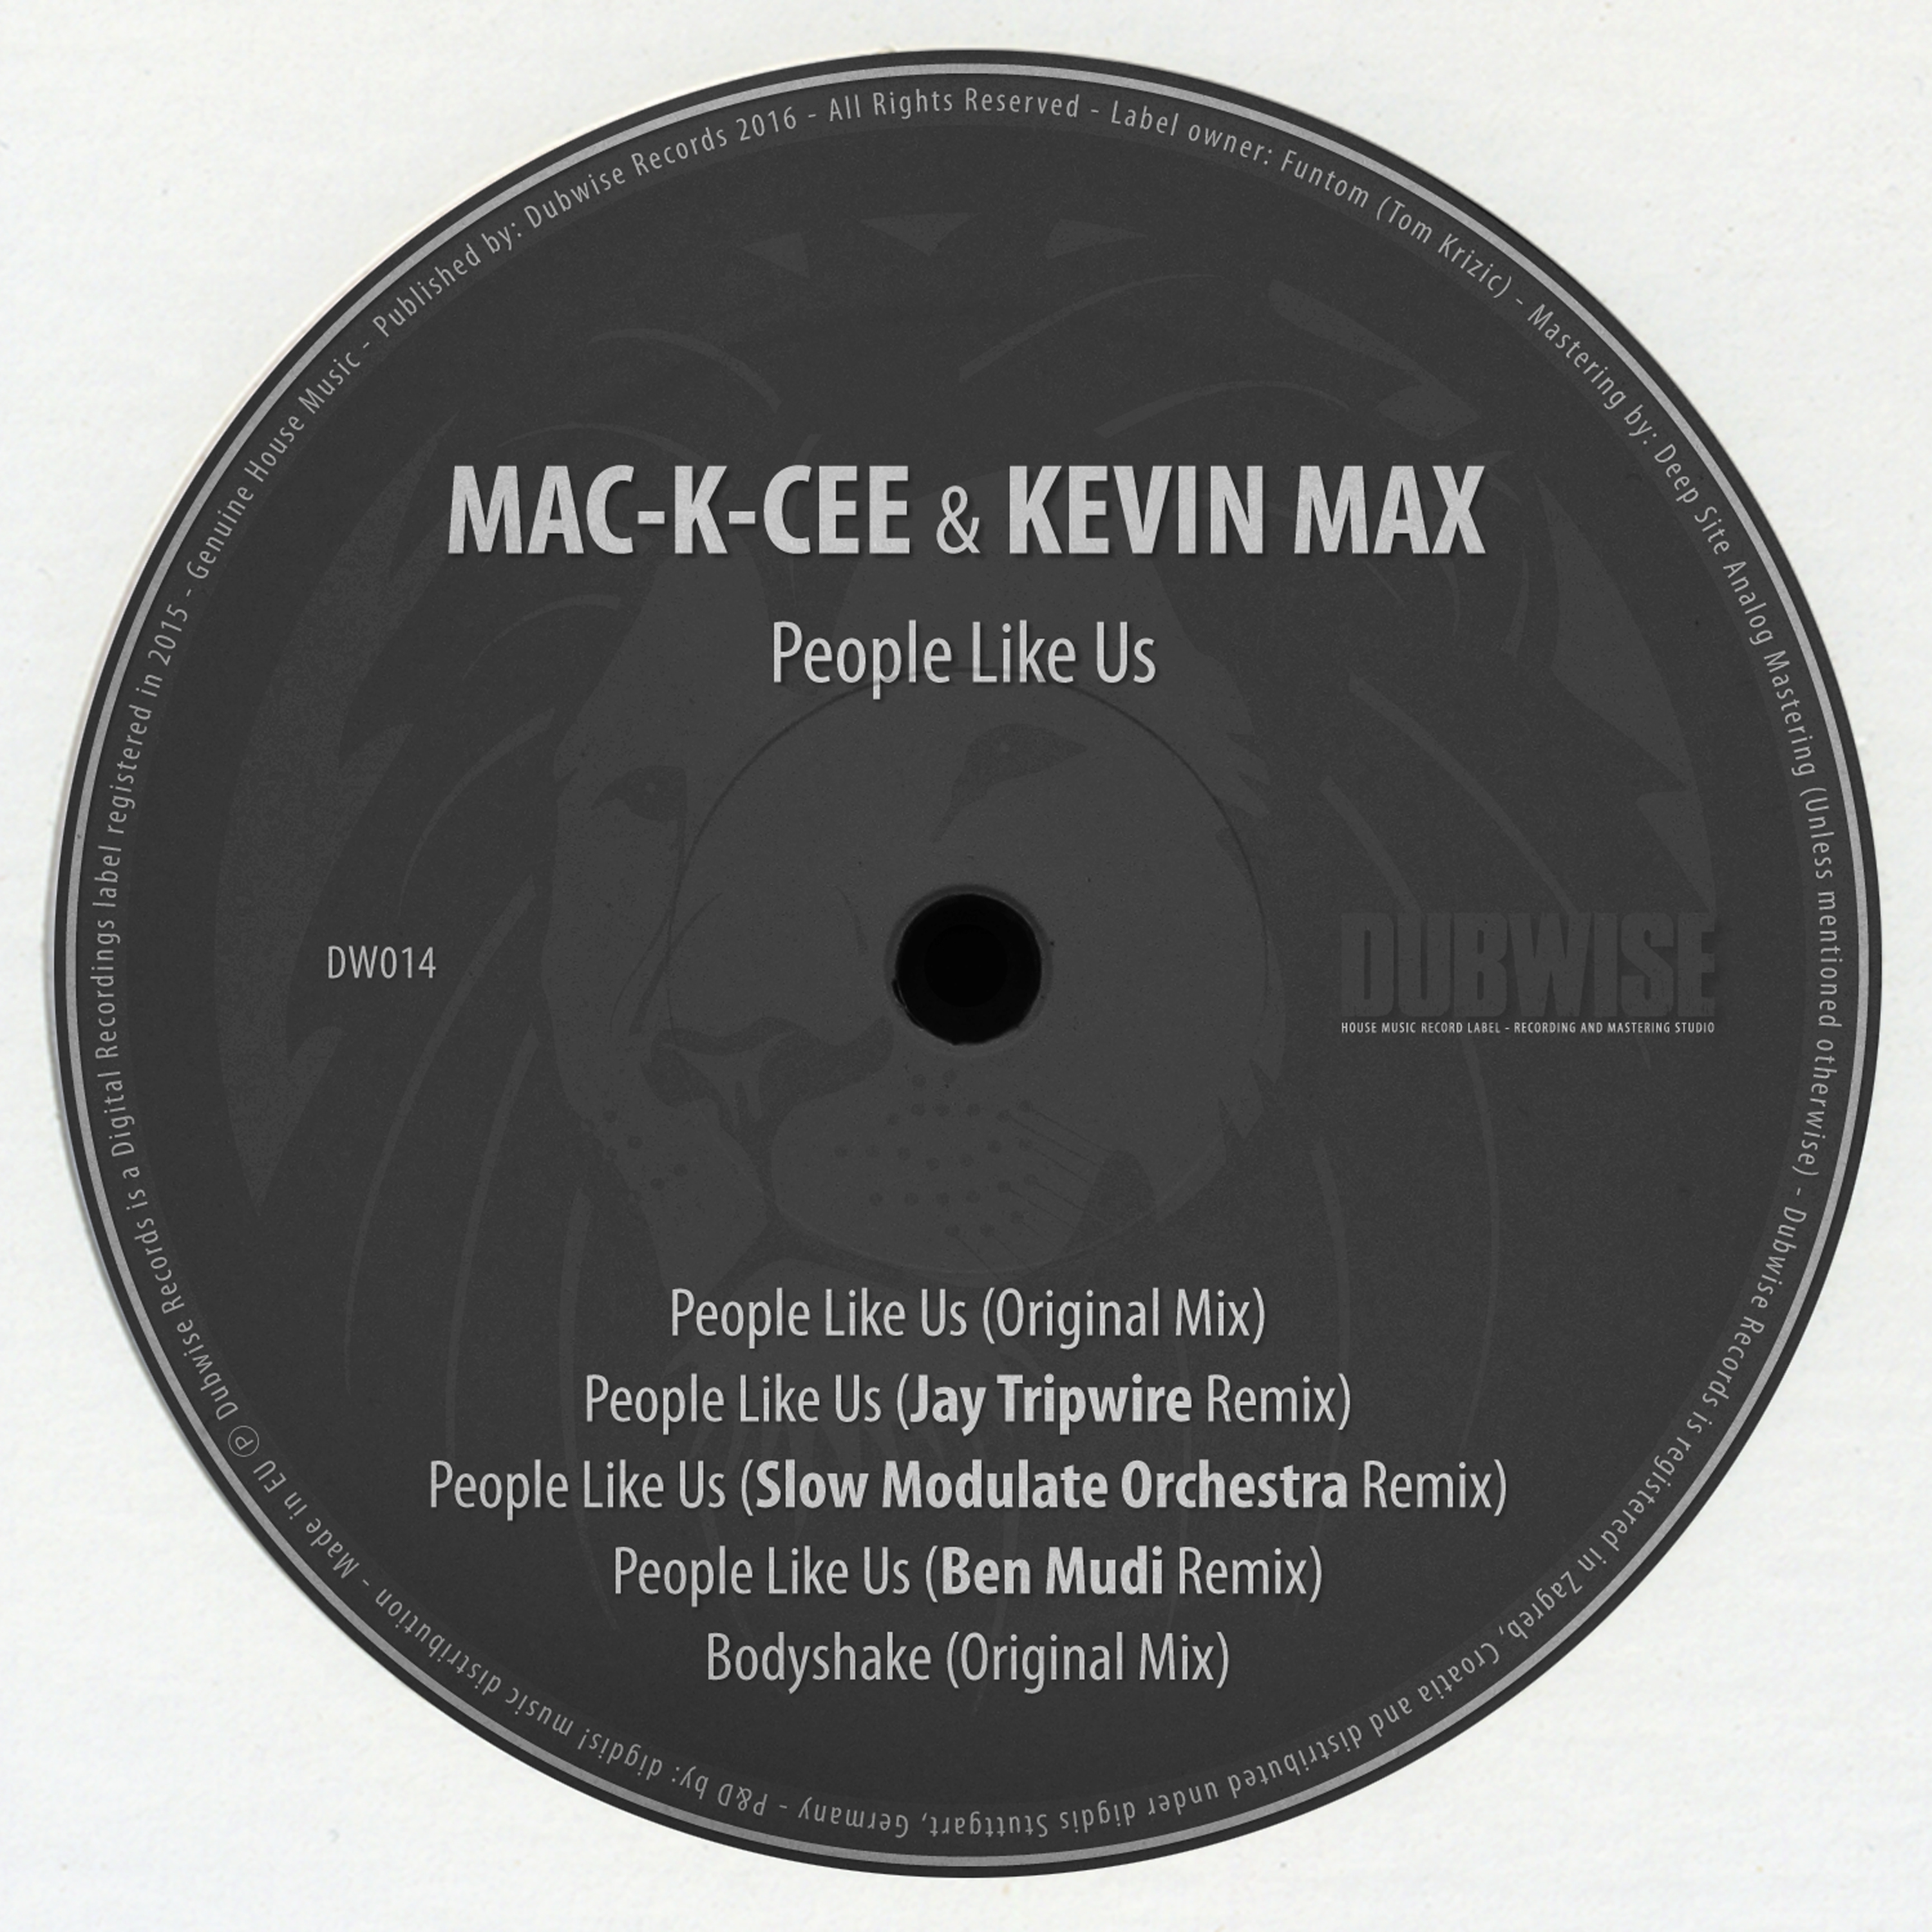 People Like Us (Jay Tripwire Remix)